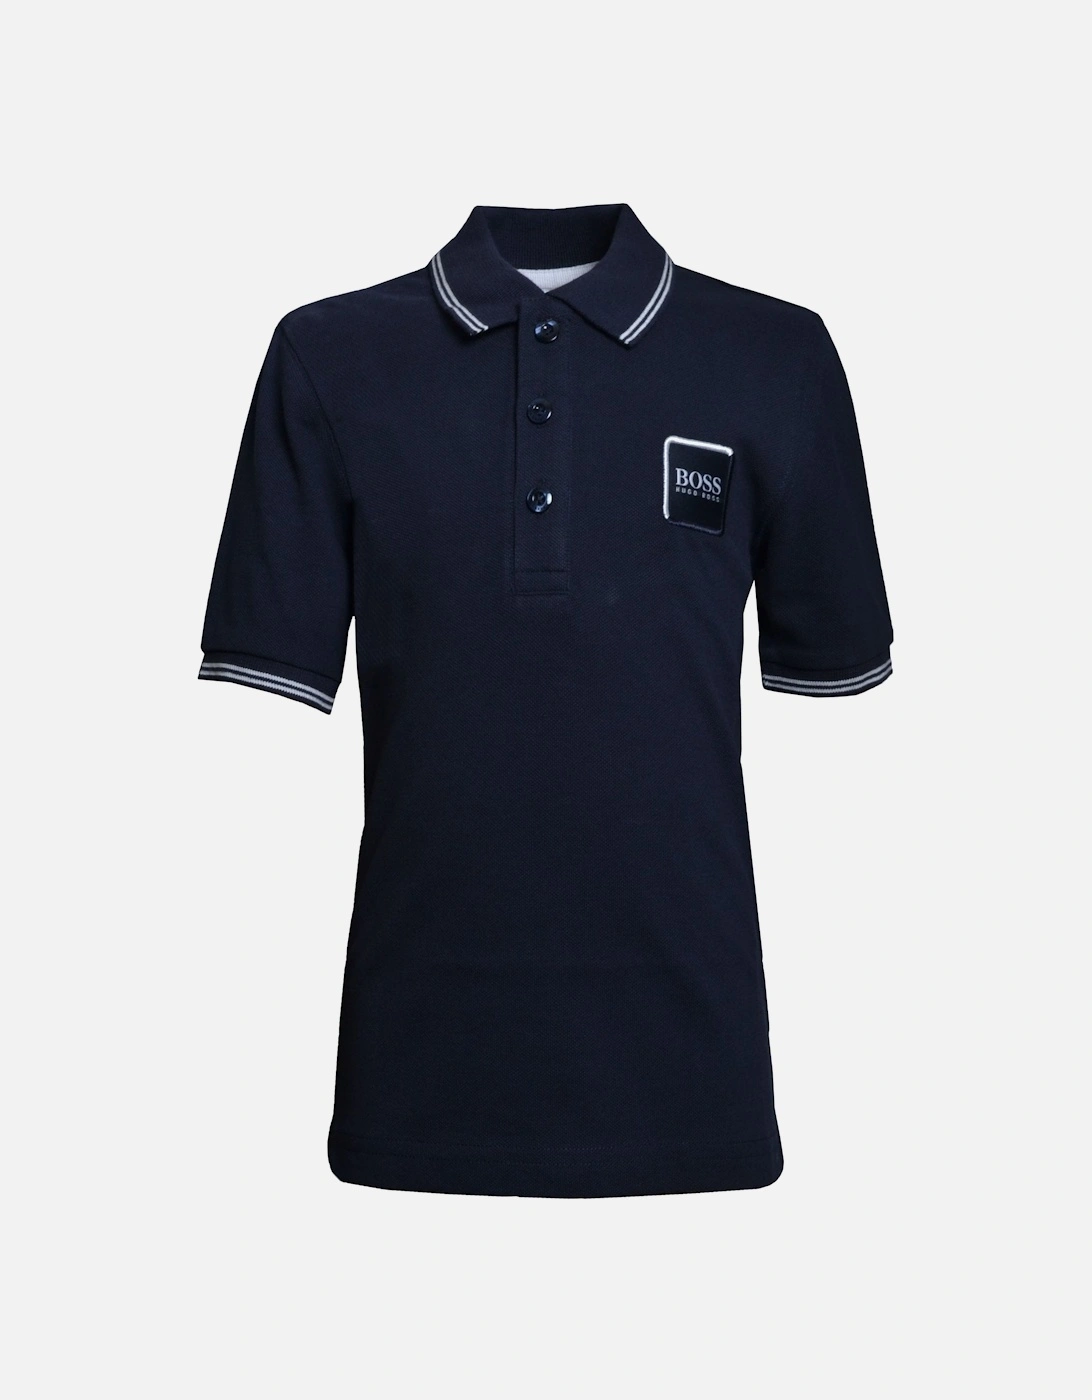 Hugo Boss Kids Navy Short Sleeve Polo Shirt - Blue/Dark (Shade)/Navy